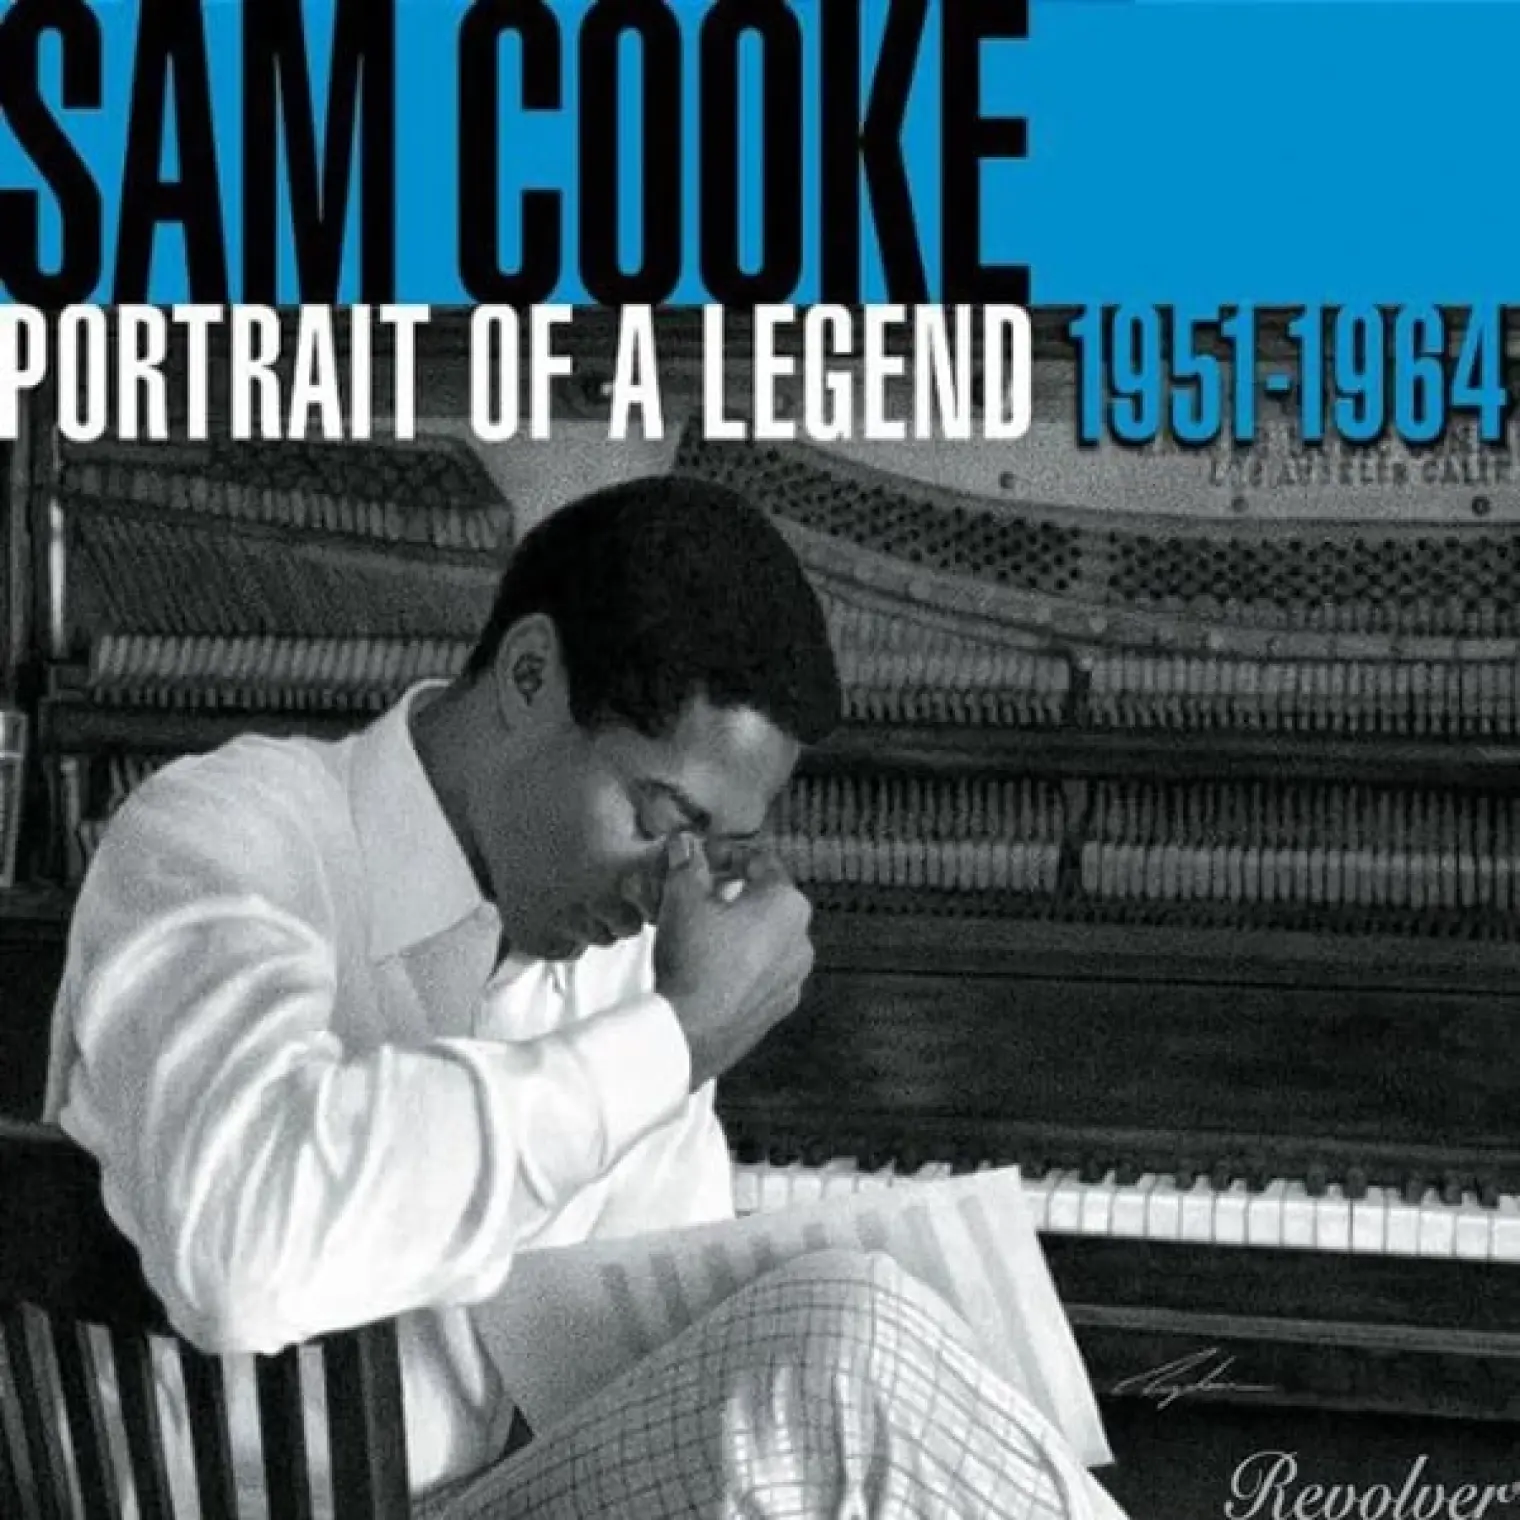 Portrait Of A Legend 1951 - 1964 -  Sam Cooke 